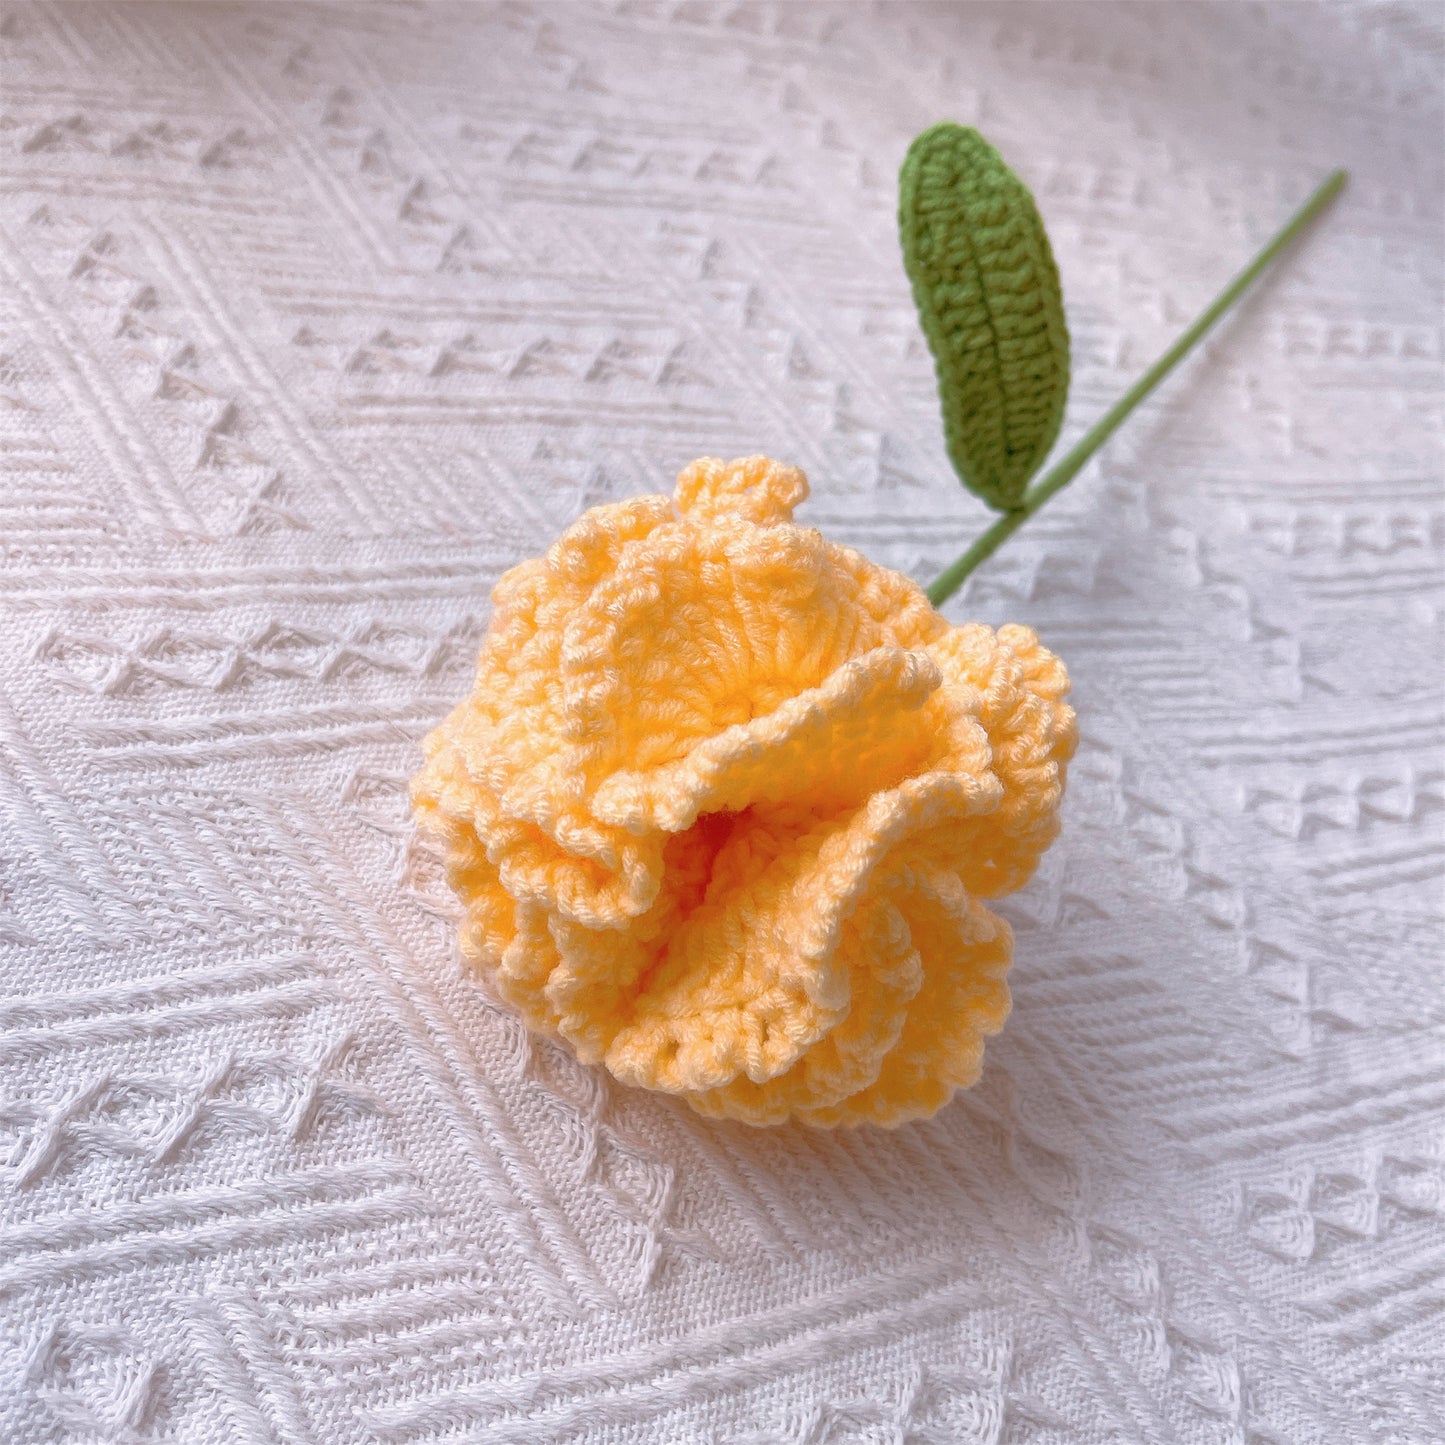 January Birth Month Carnation Bouquet - Birthday Flower Celebration Hand-Crocheted Single Stem Bouquet